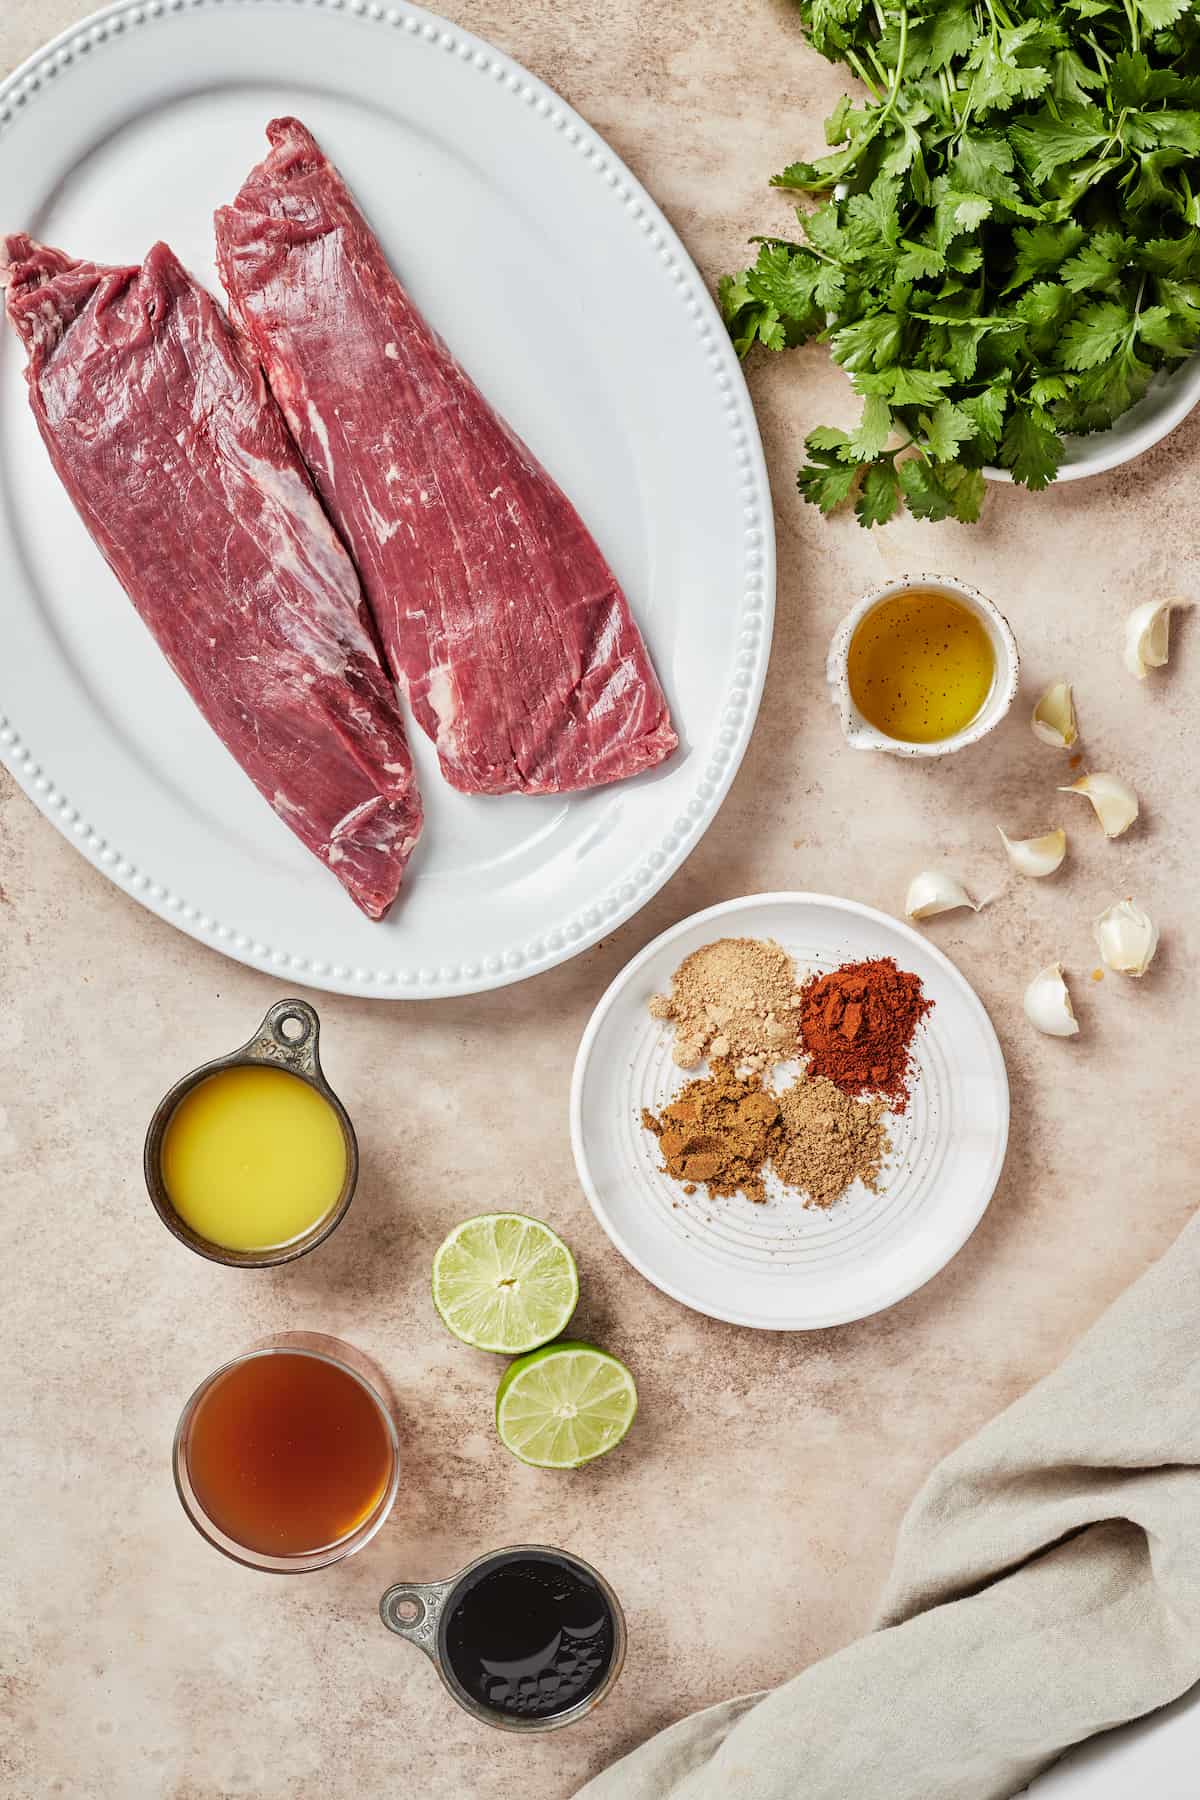 From top left: Flank steak pieces, fresh cilantro, avocado oil, garlic, spices, lime halves, tamari sauce, beef broth, orange juice.